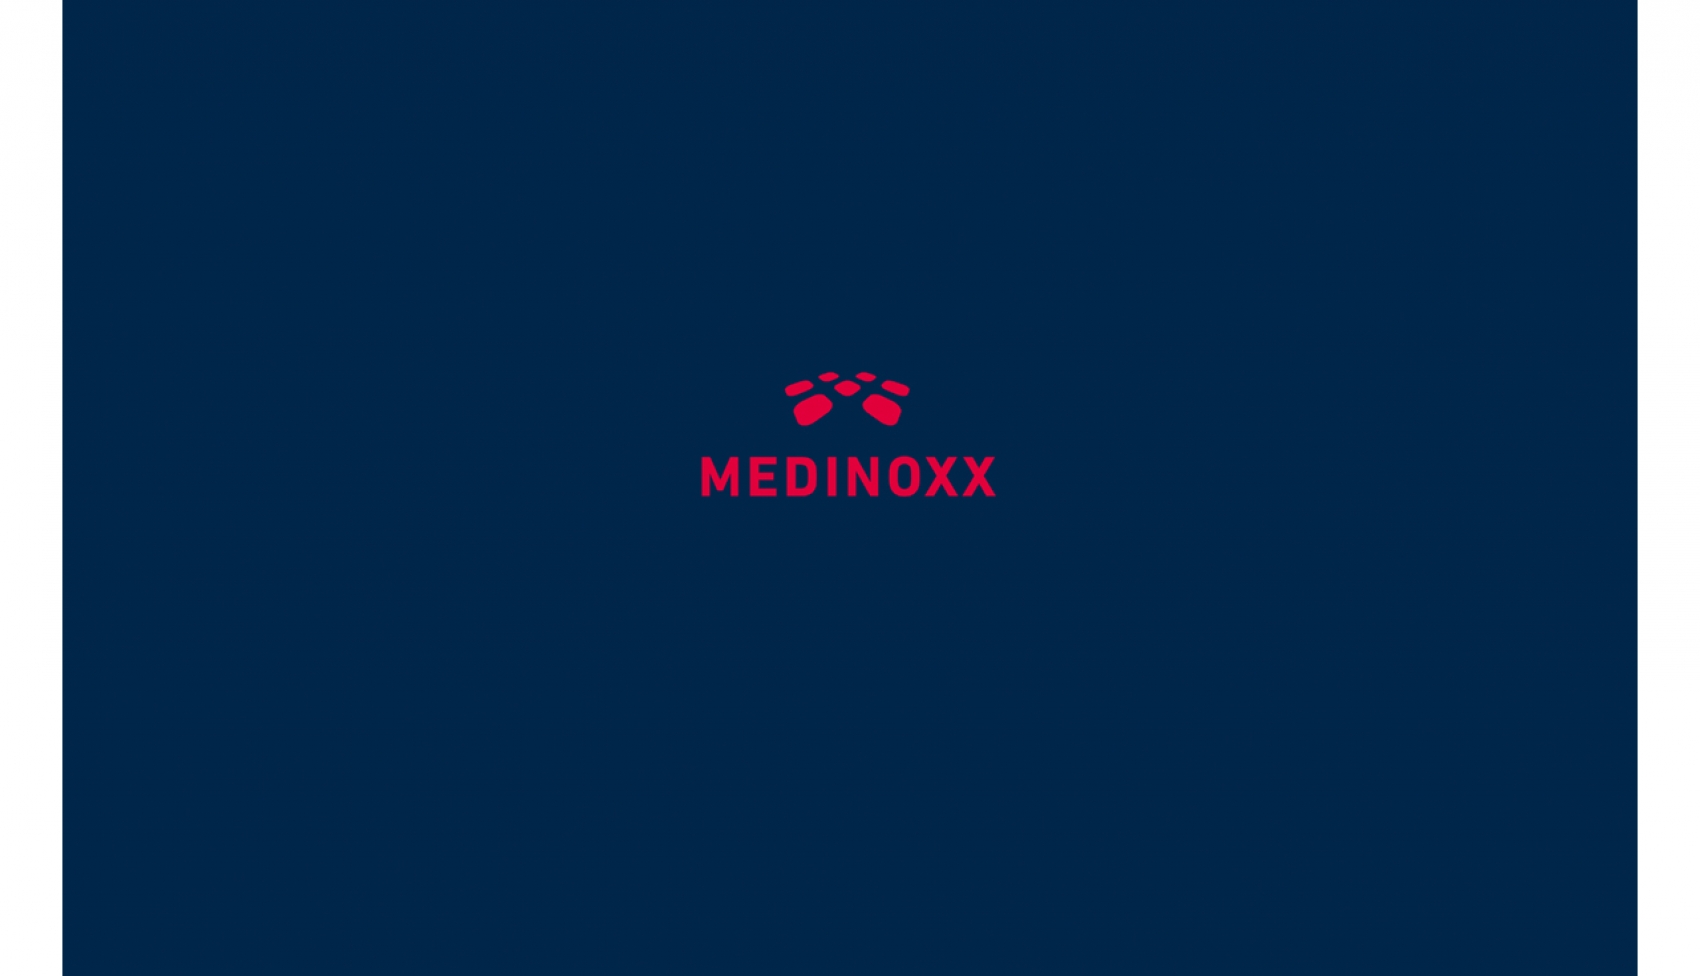 Medinoxx